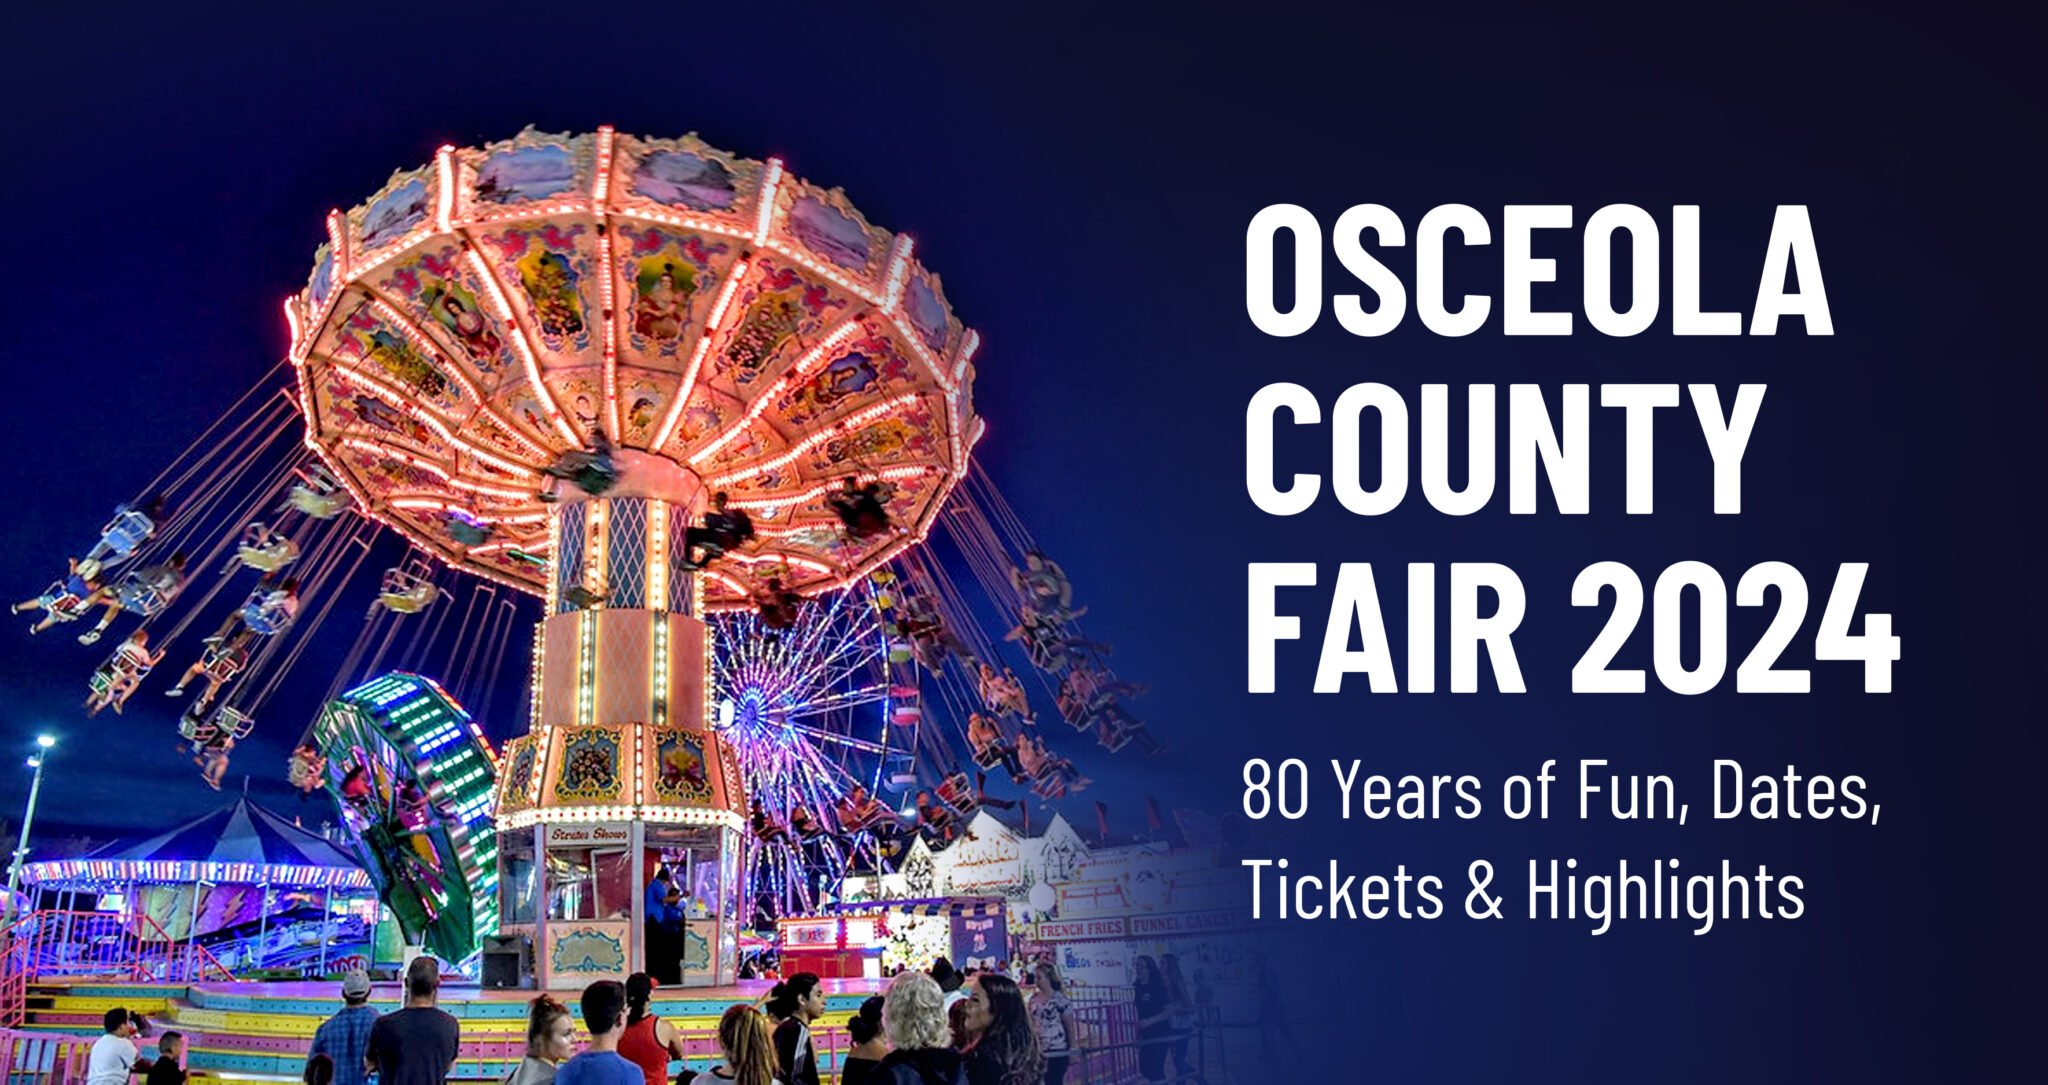 Osceola County Fair 2024 Celebrating 80 Years of Fun